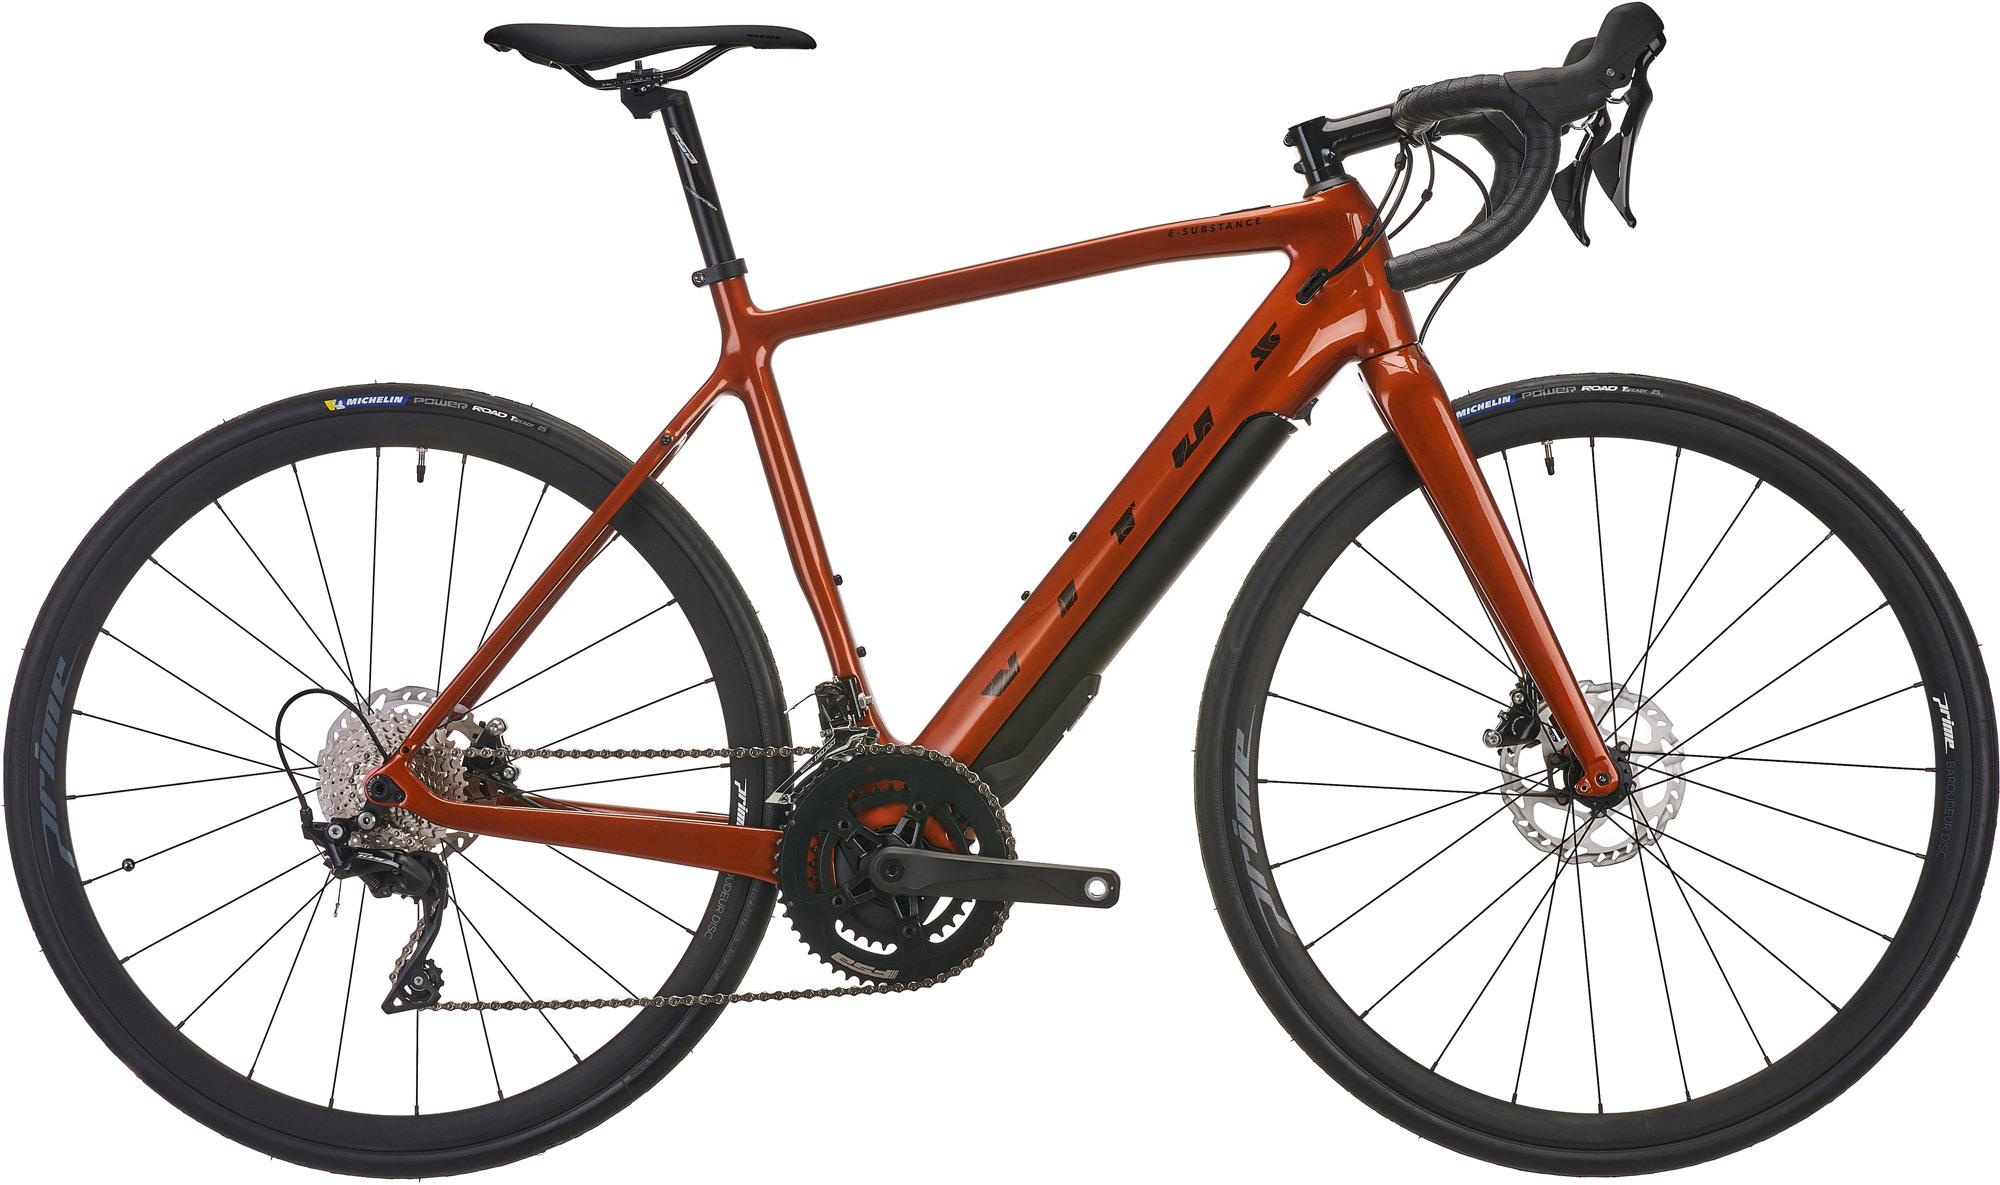 Vitus E-substance Carbon Road E-bike (105) - Copper